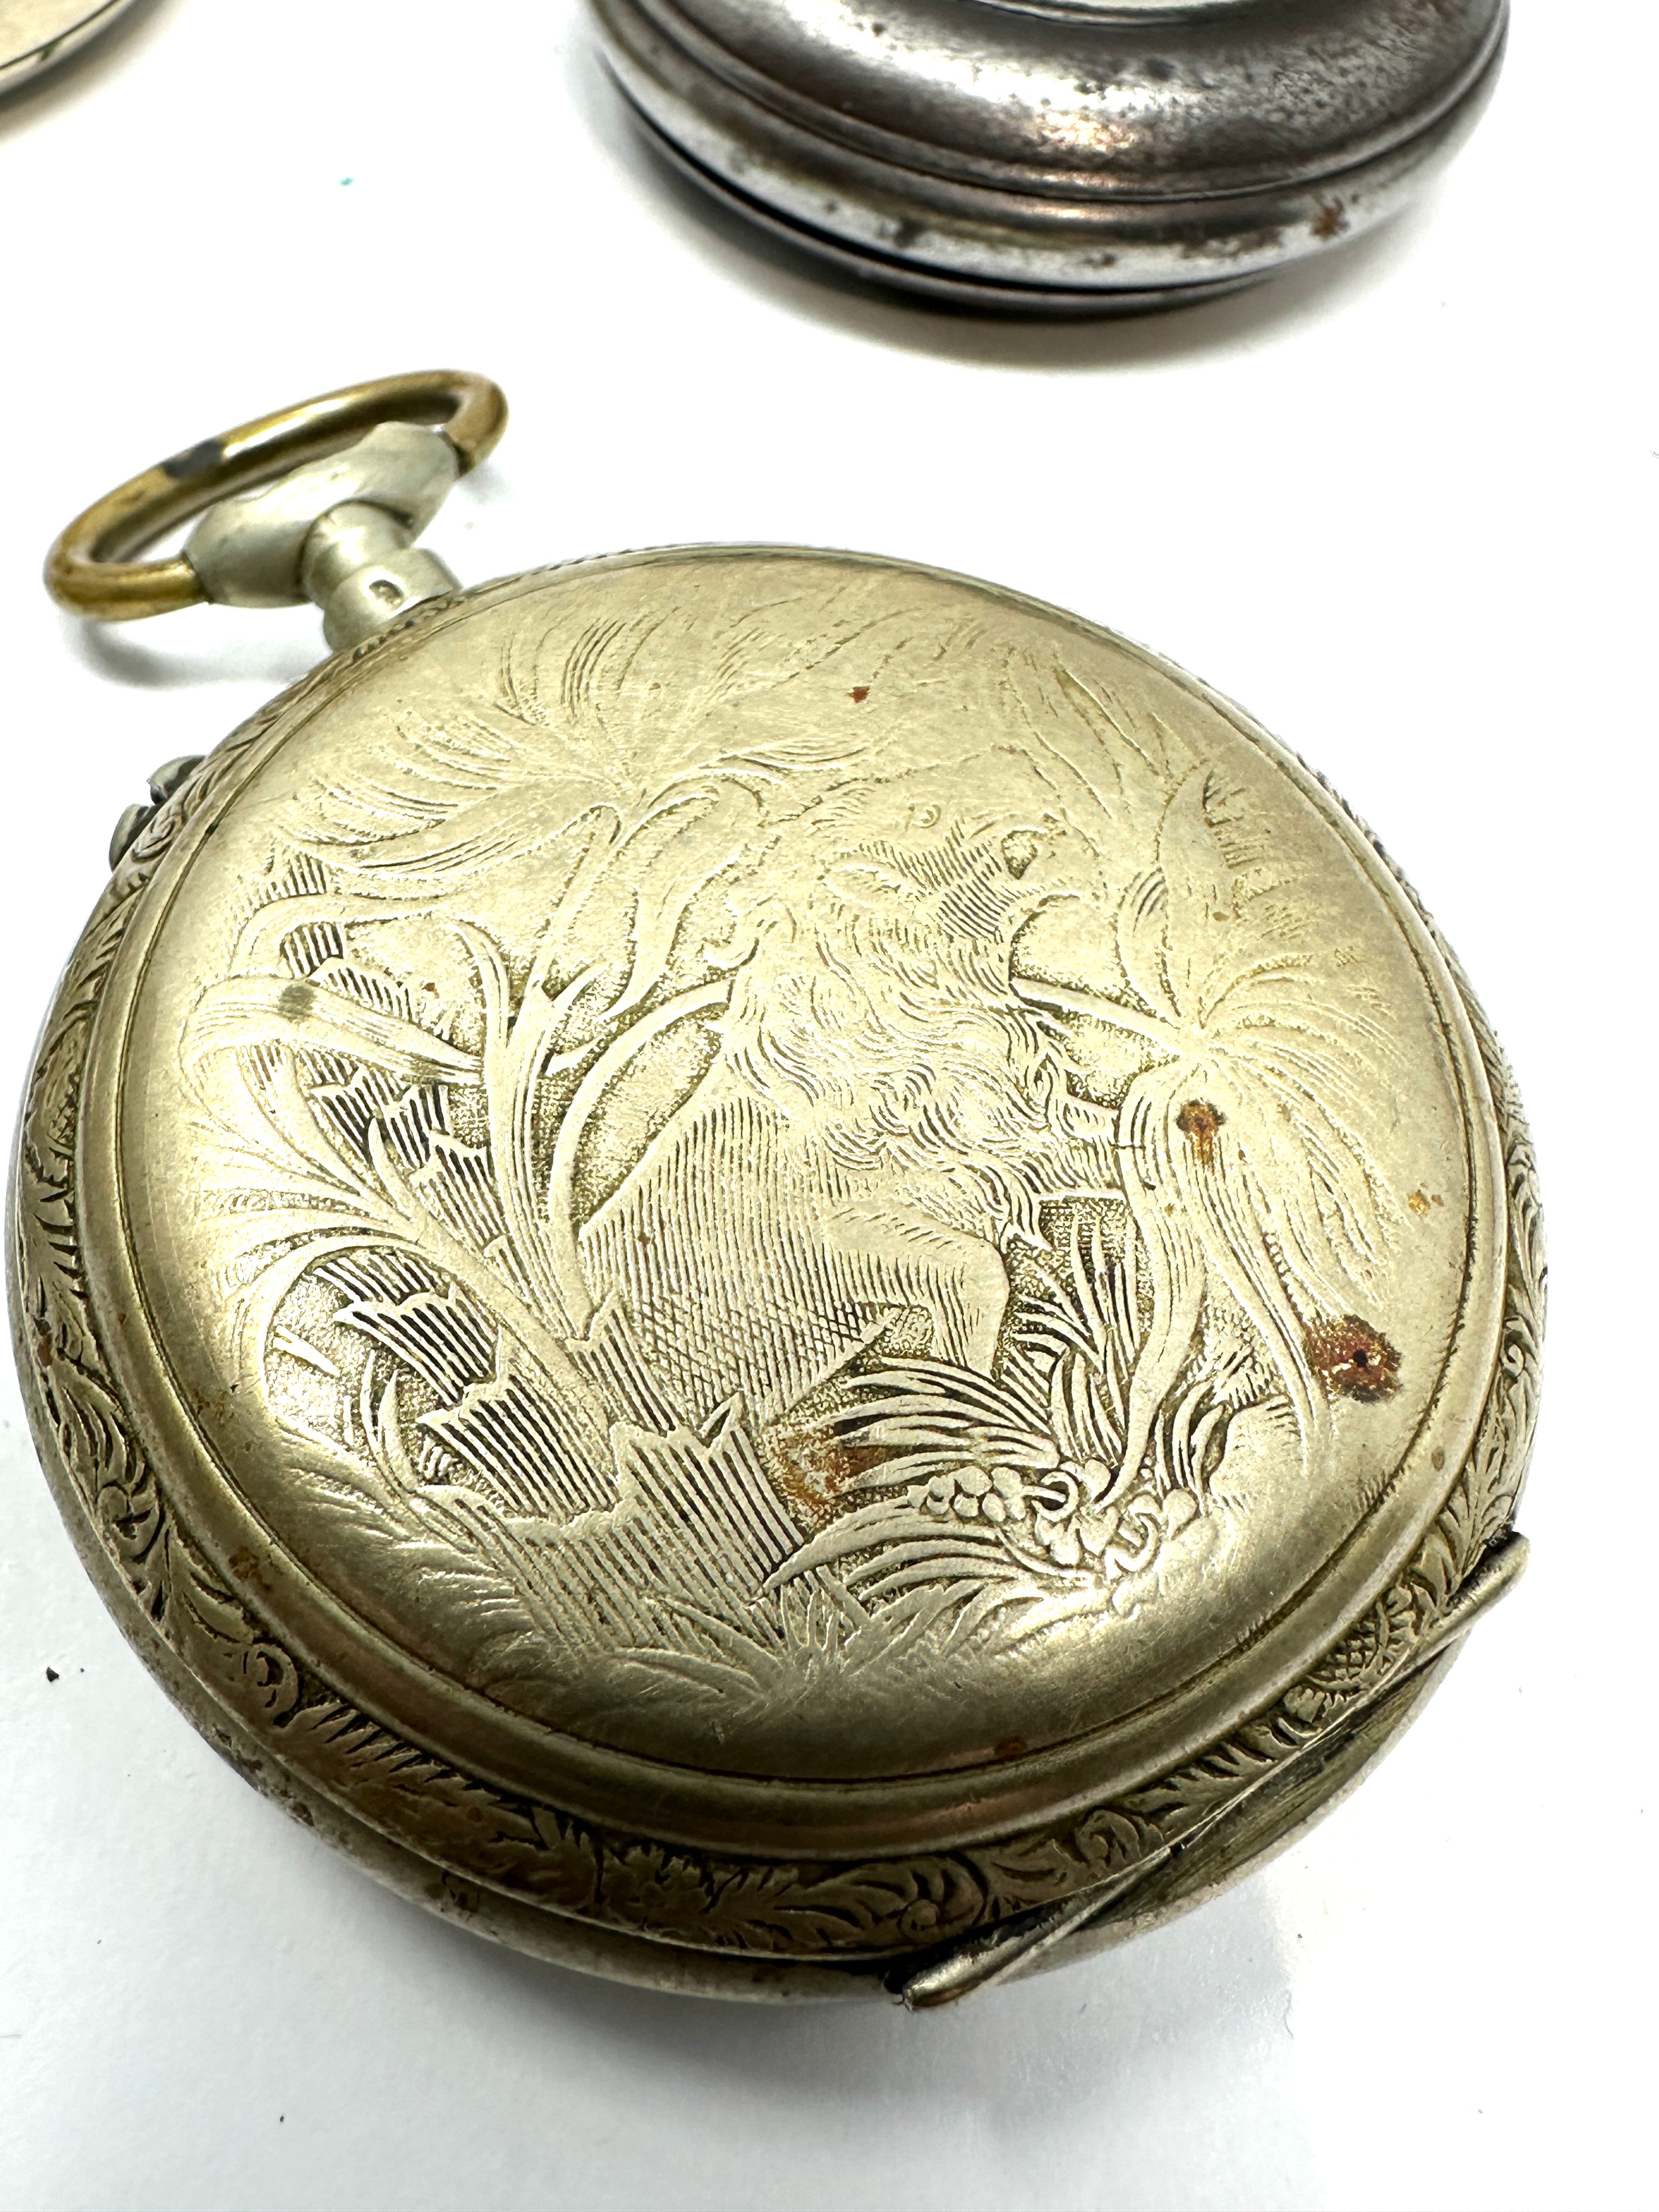 4 Vintage pocket watches cyma brialle & roskopfe etc spares or repair - Image 4 of 6